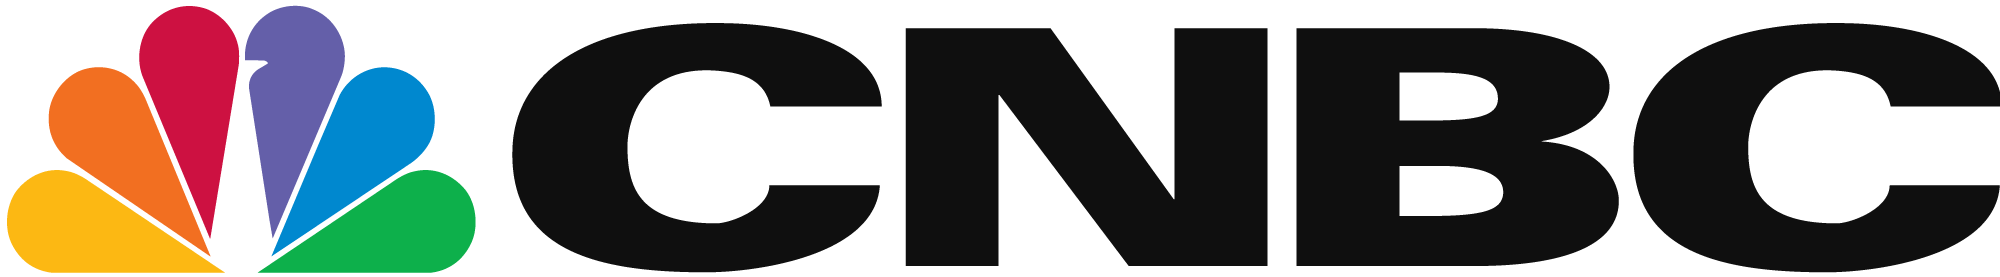 cnbc logo black